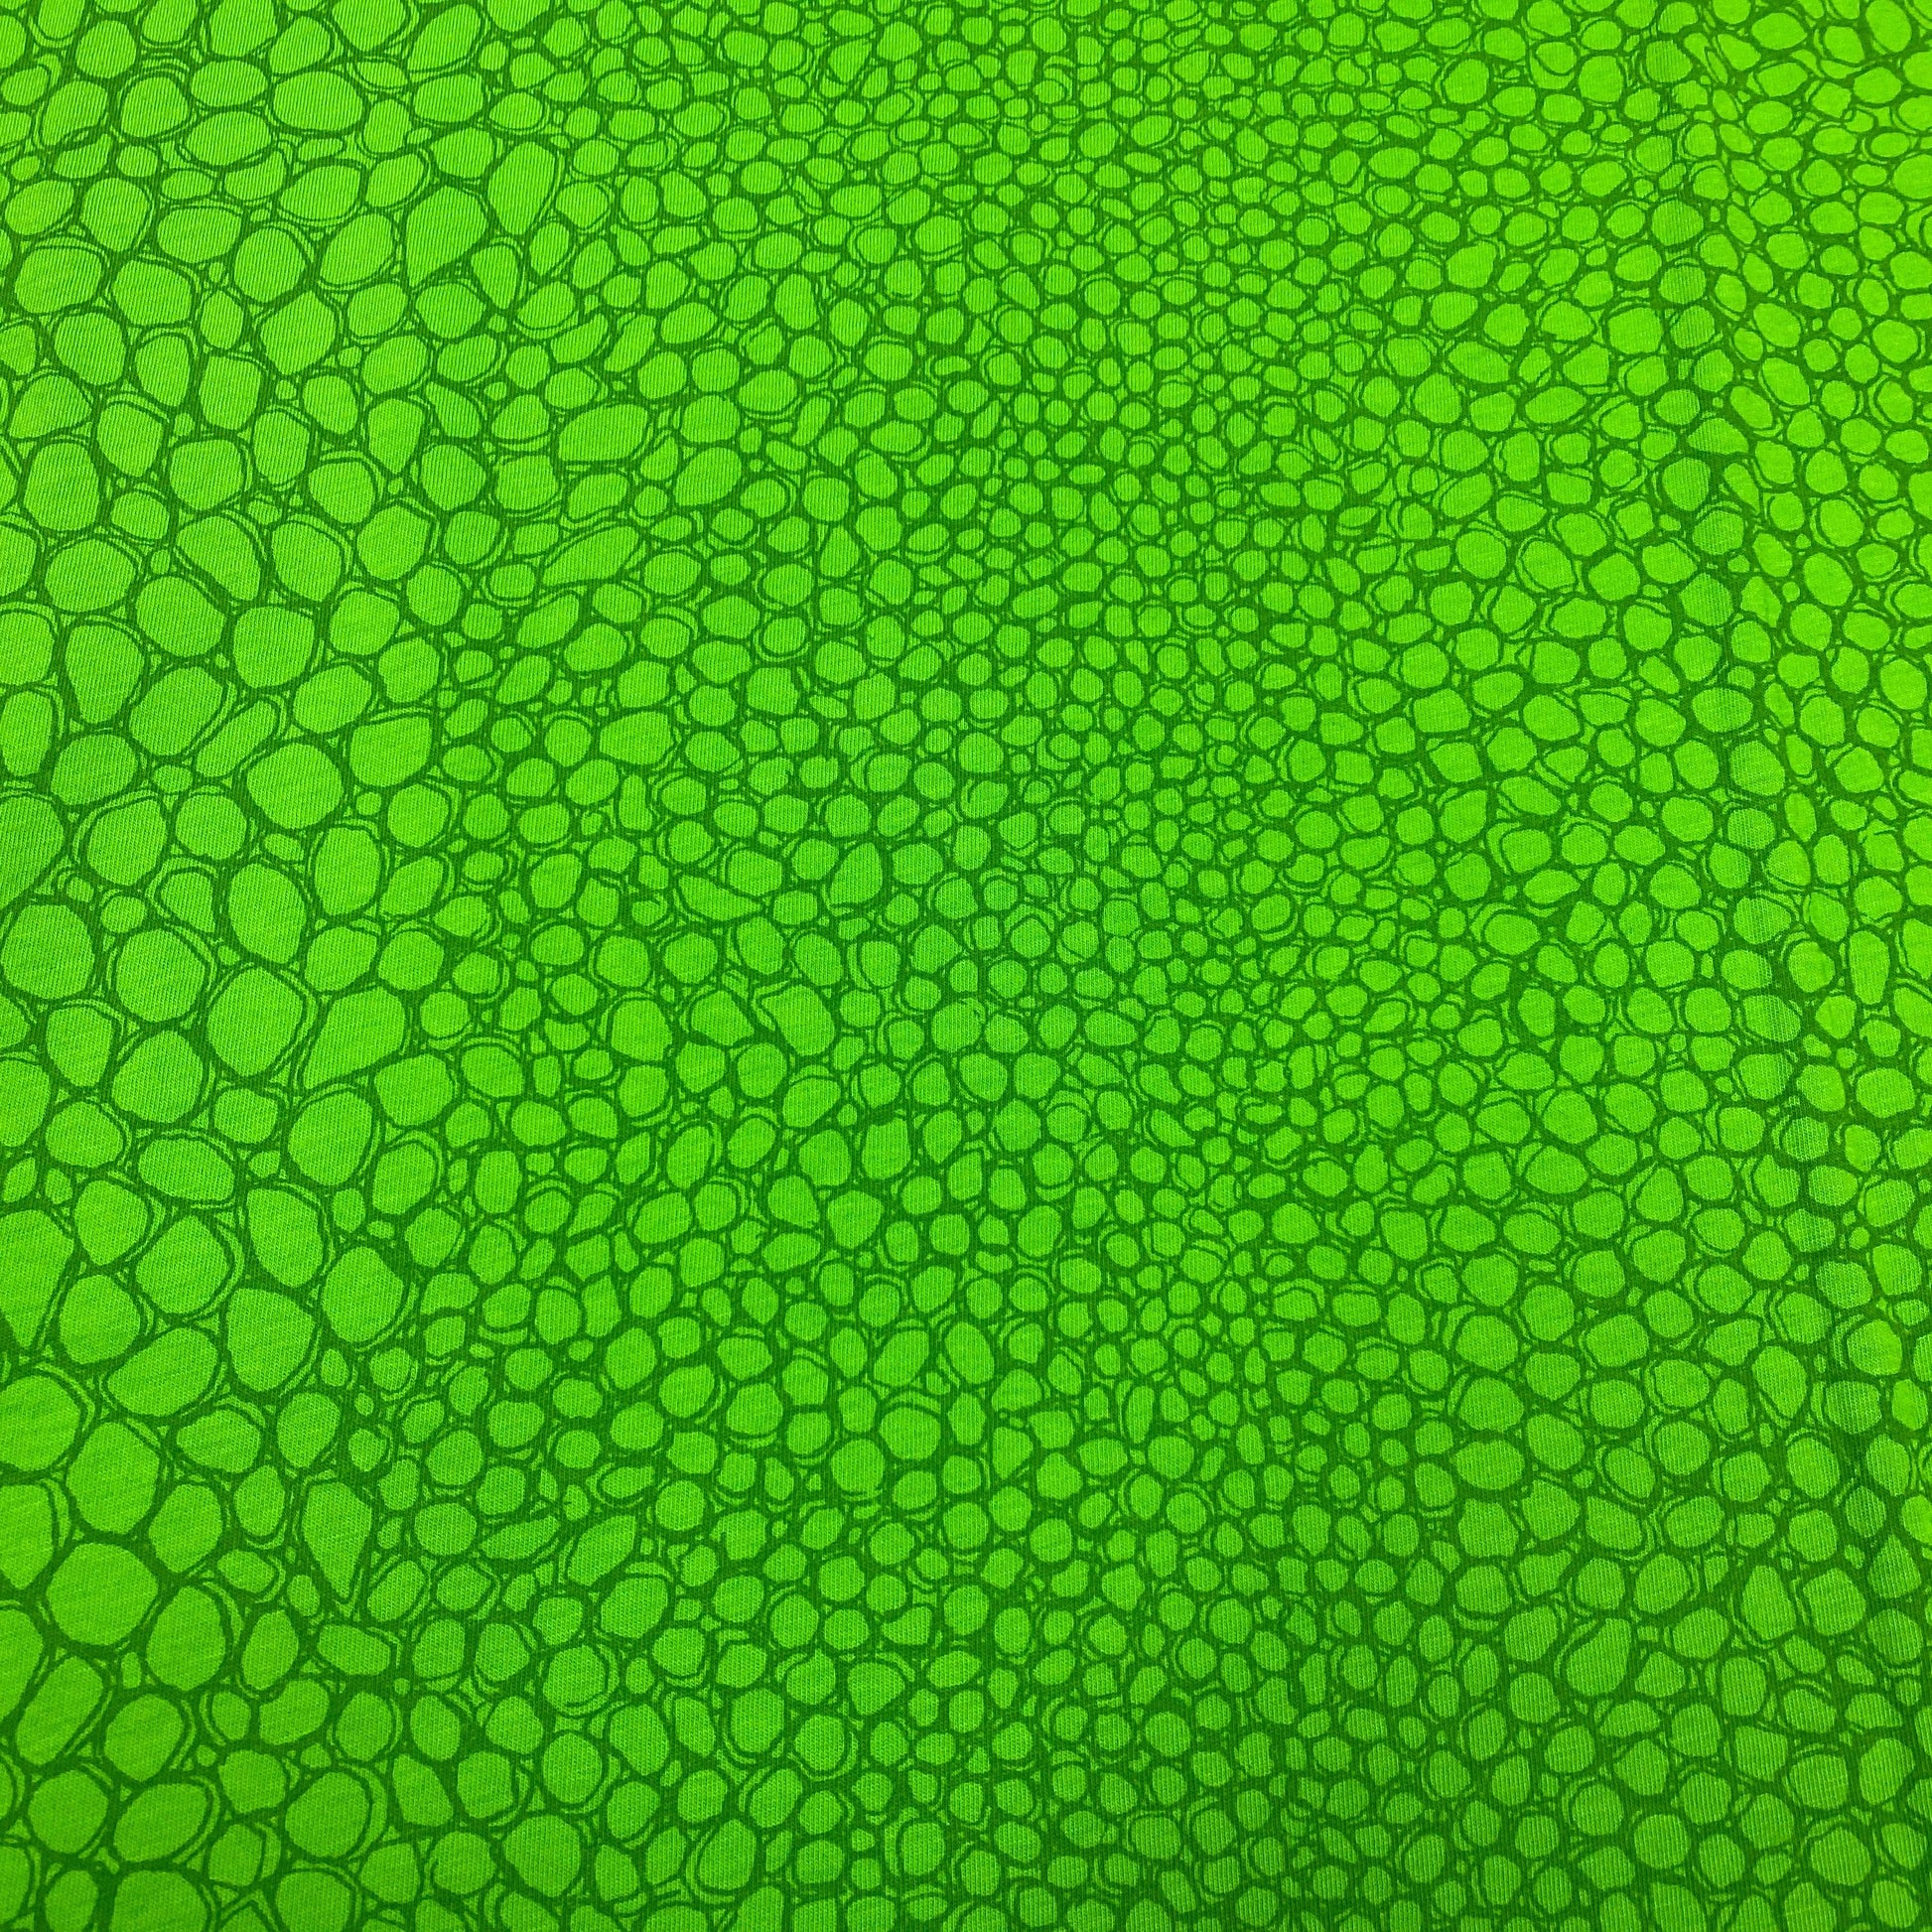 Alligator Skin on Green Organic Cotton Jersey - Nature's Fabrics